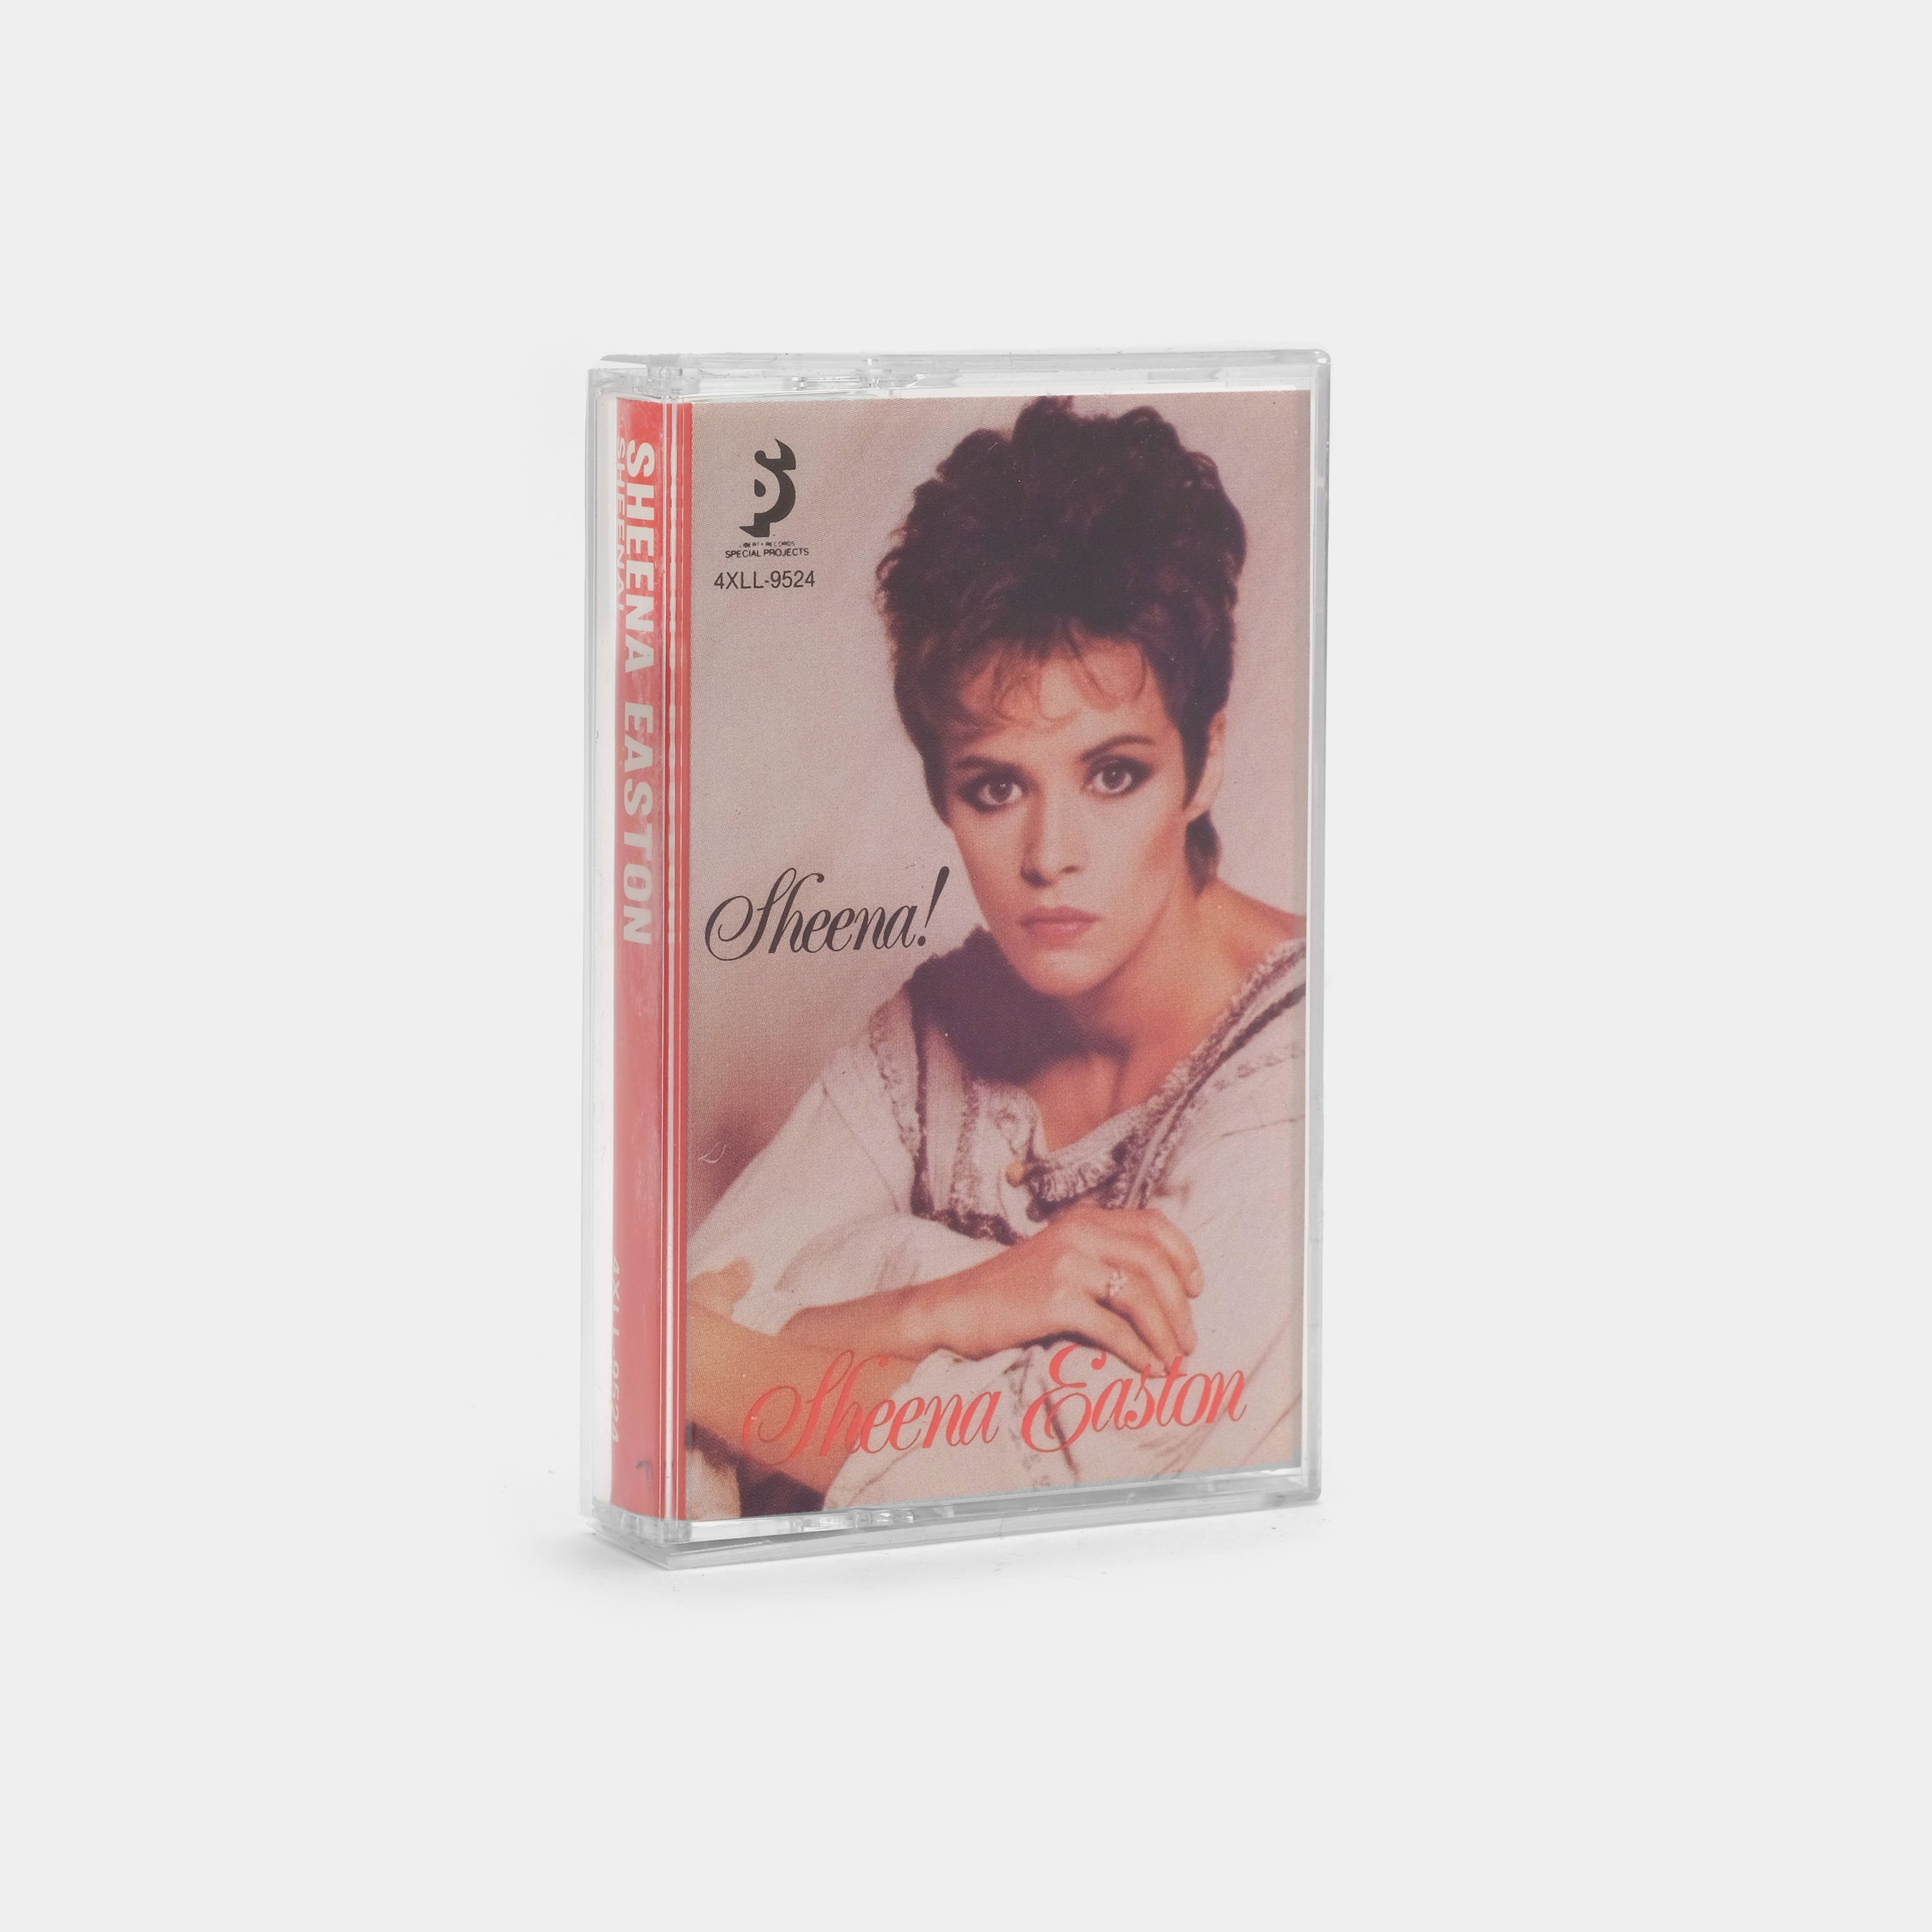 Sheena Easton - Sheena! Cassette Tape